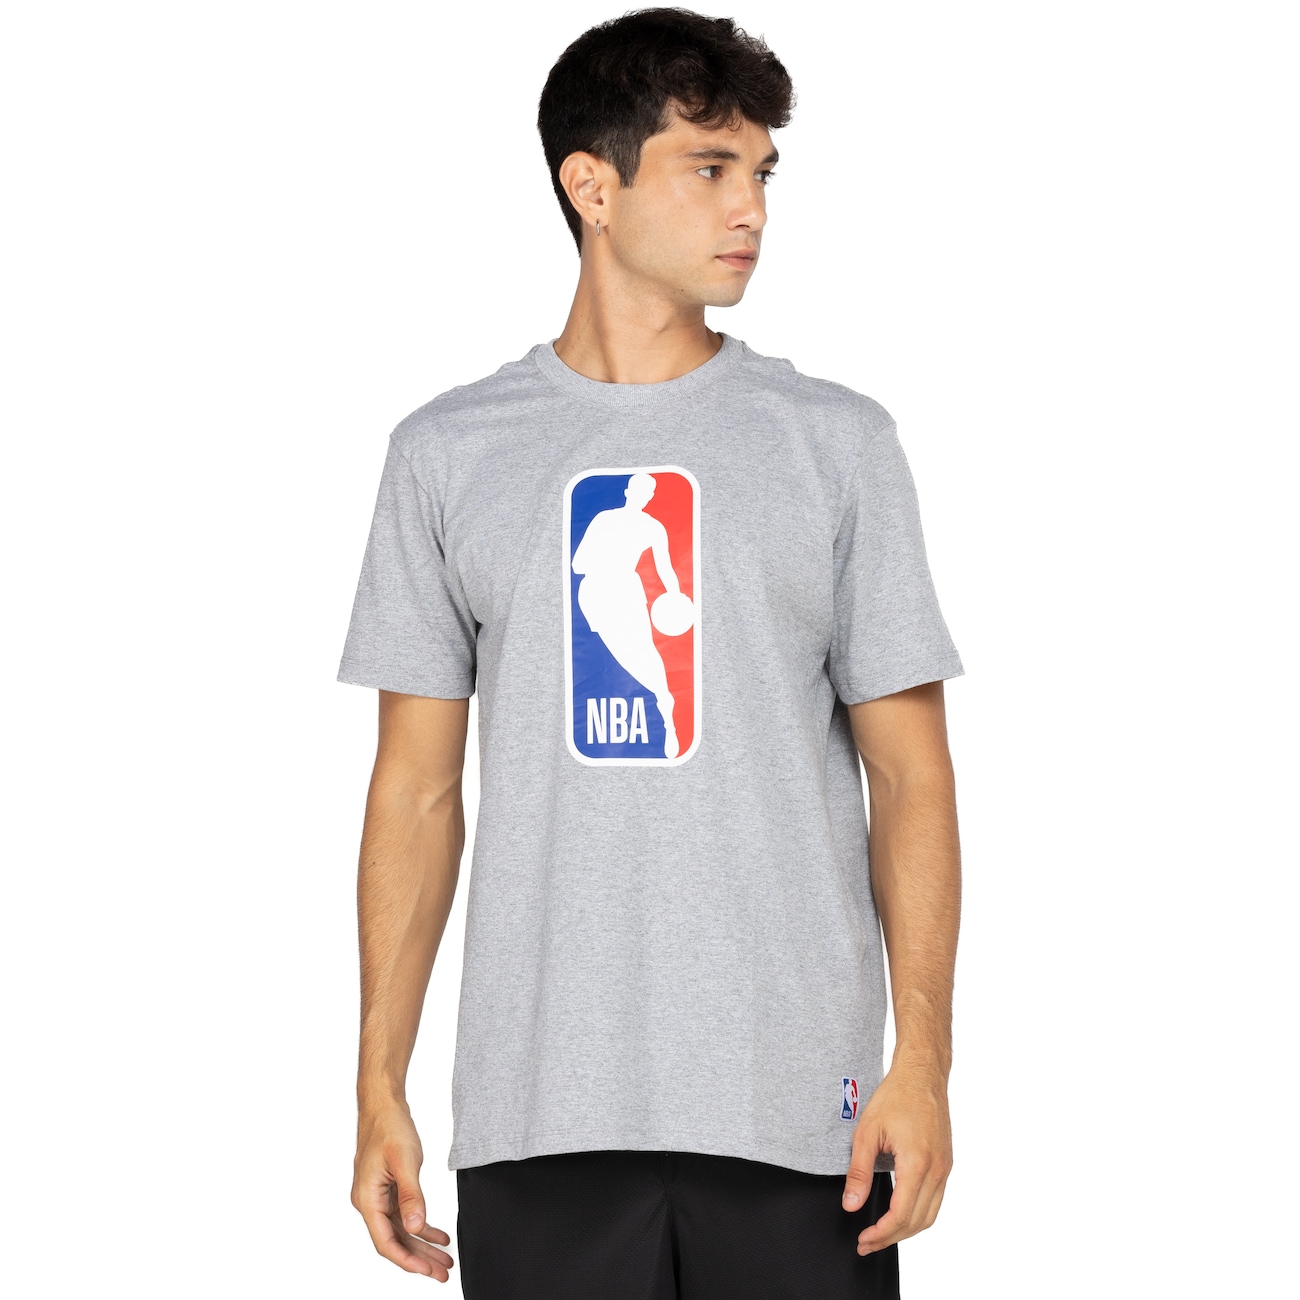 Camiseta Masculina NBA Manga Curta Transfer 